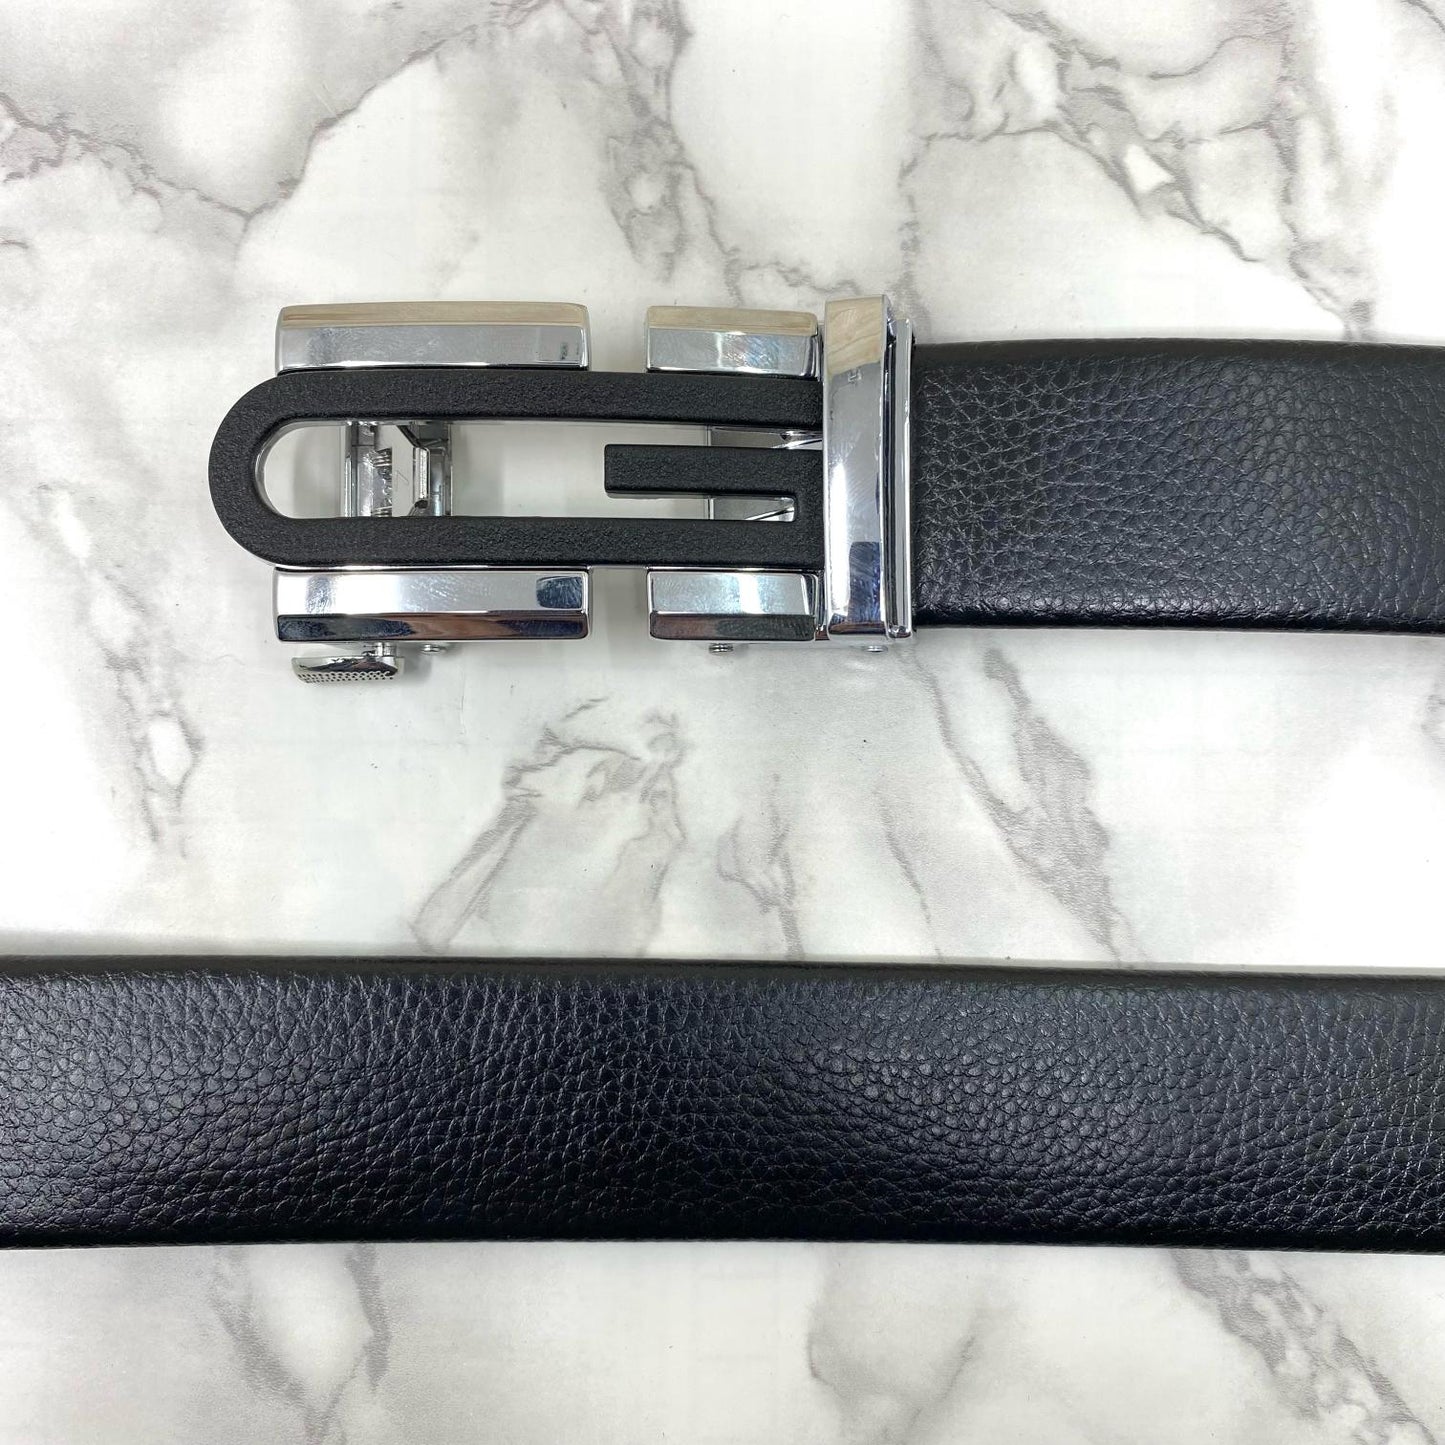 Fashionable Auto Lock Formal Belt With Adjustable Feature-JonasParamount